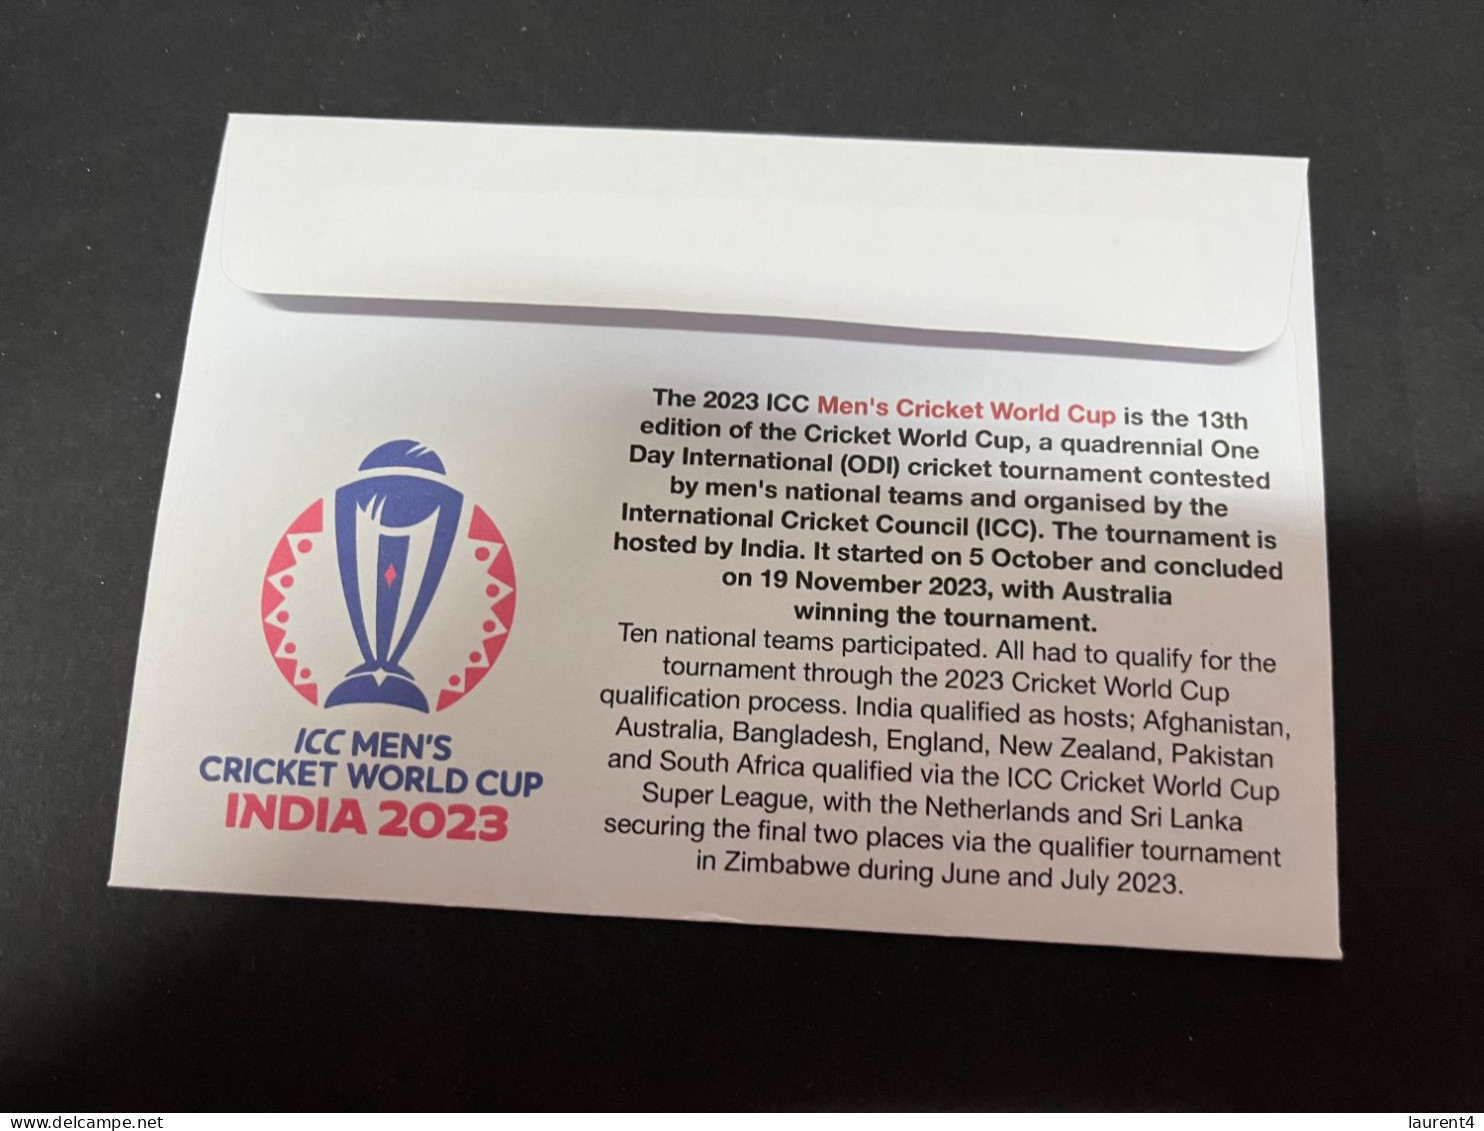 22-11-2023 (3 V 7) Australia Win The ICC Men's Cricket World Cup 2023 In India (19-11-2023) - Cricket